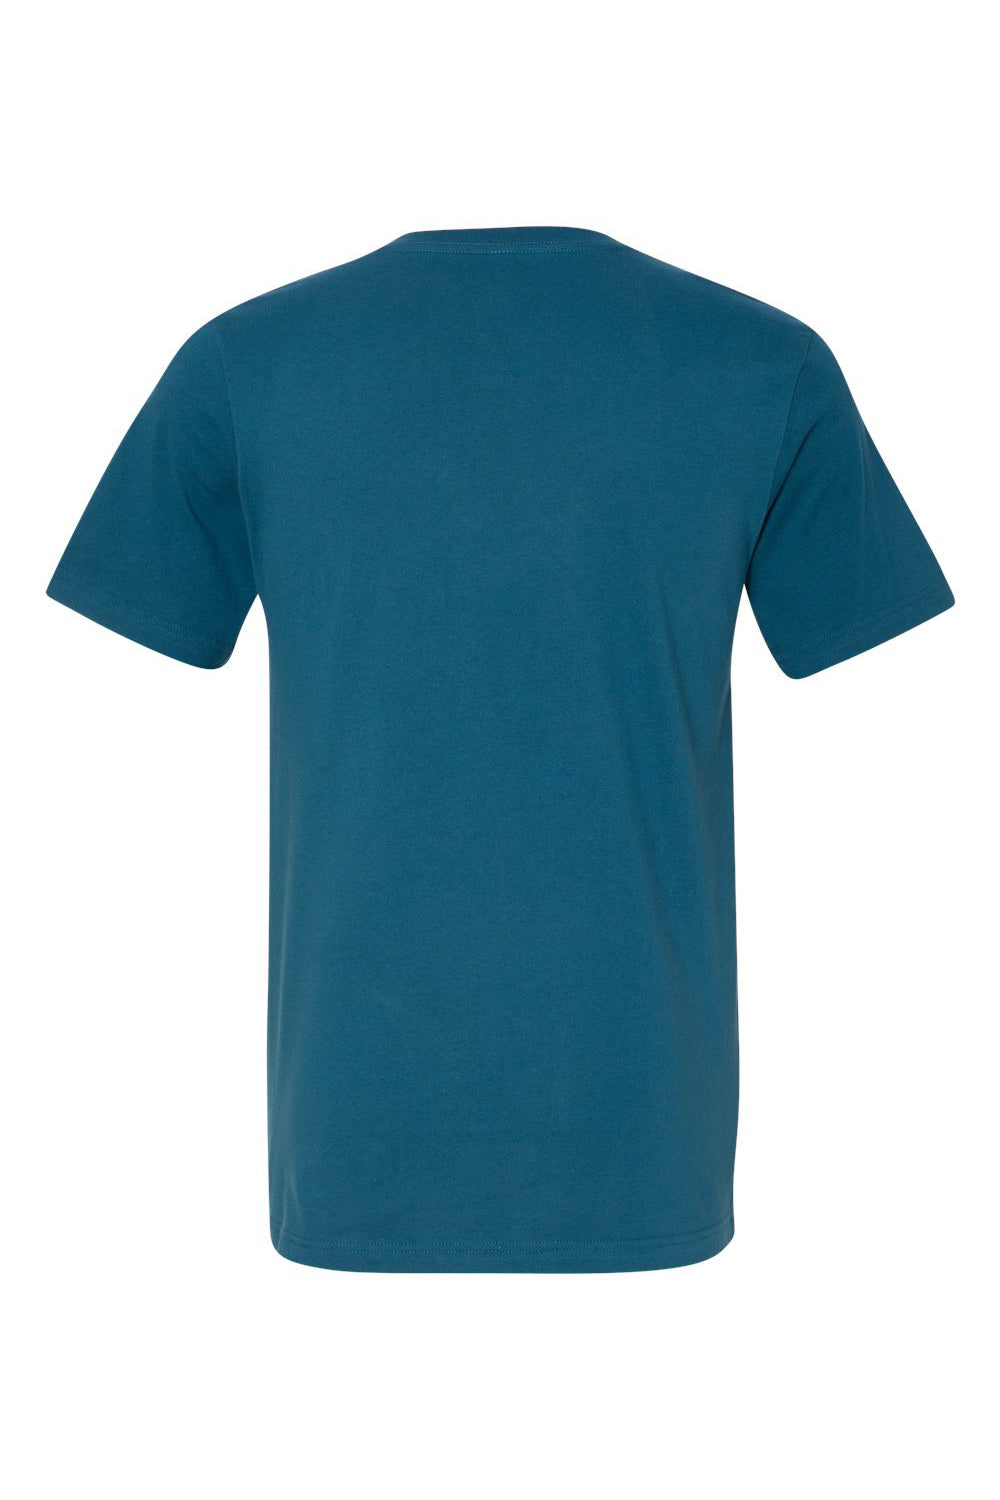 Bella + Canvas BC3005/3005/3655C Mens Jersey Short Sleeve V-Neck T-Shirt Deep Teal Blue Flat Back